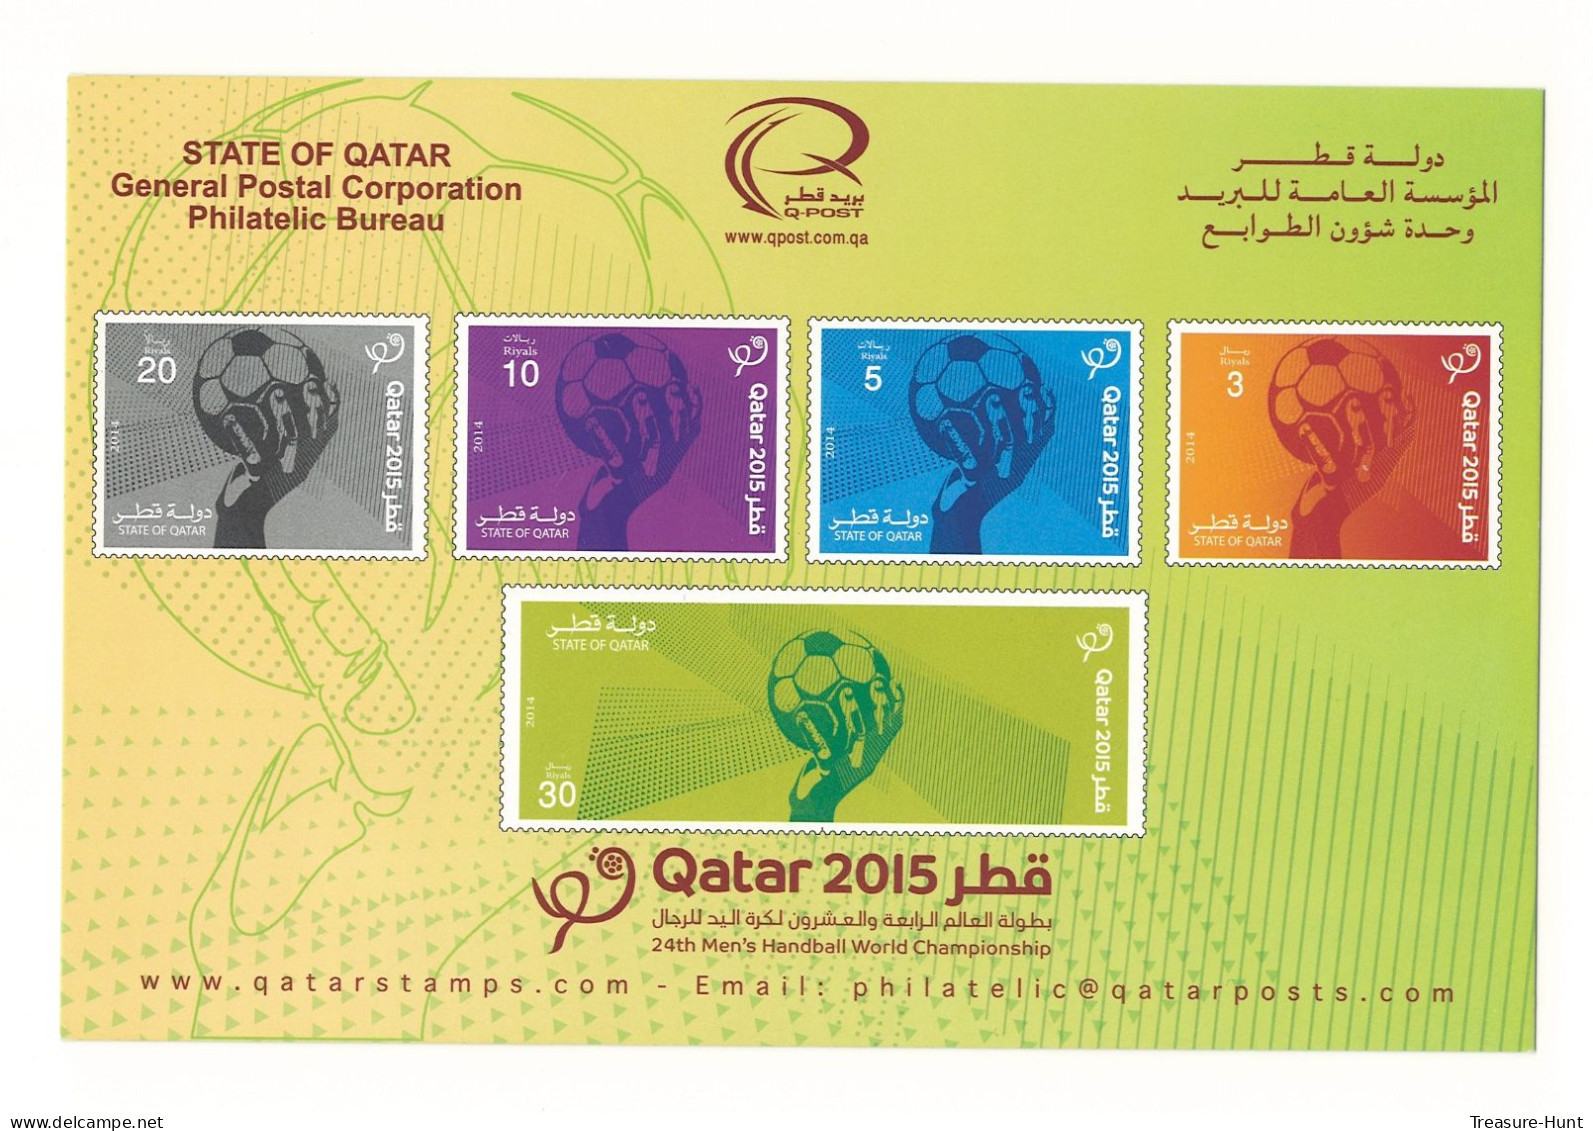 QATAR NEW STAMPS ISSUE BULLETIN / BROCHURE / POSTAL NOTICE - 2014 MEN HANDBALL WORLD CHAMPIONSHIP, SPORTS LOGO - Qatar